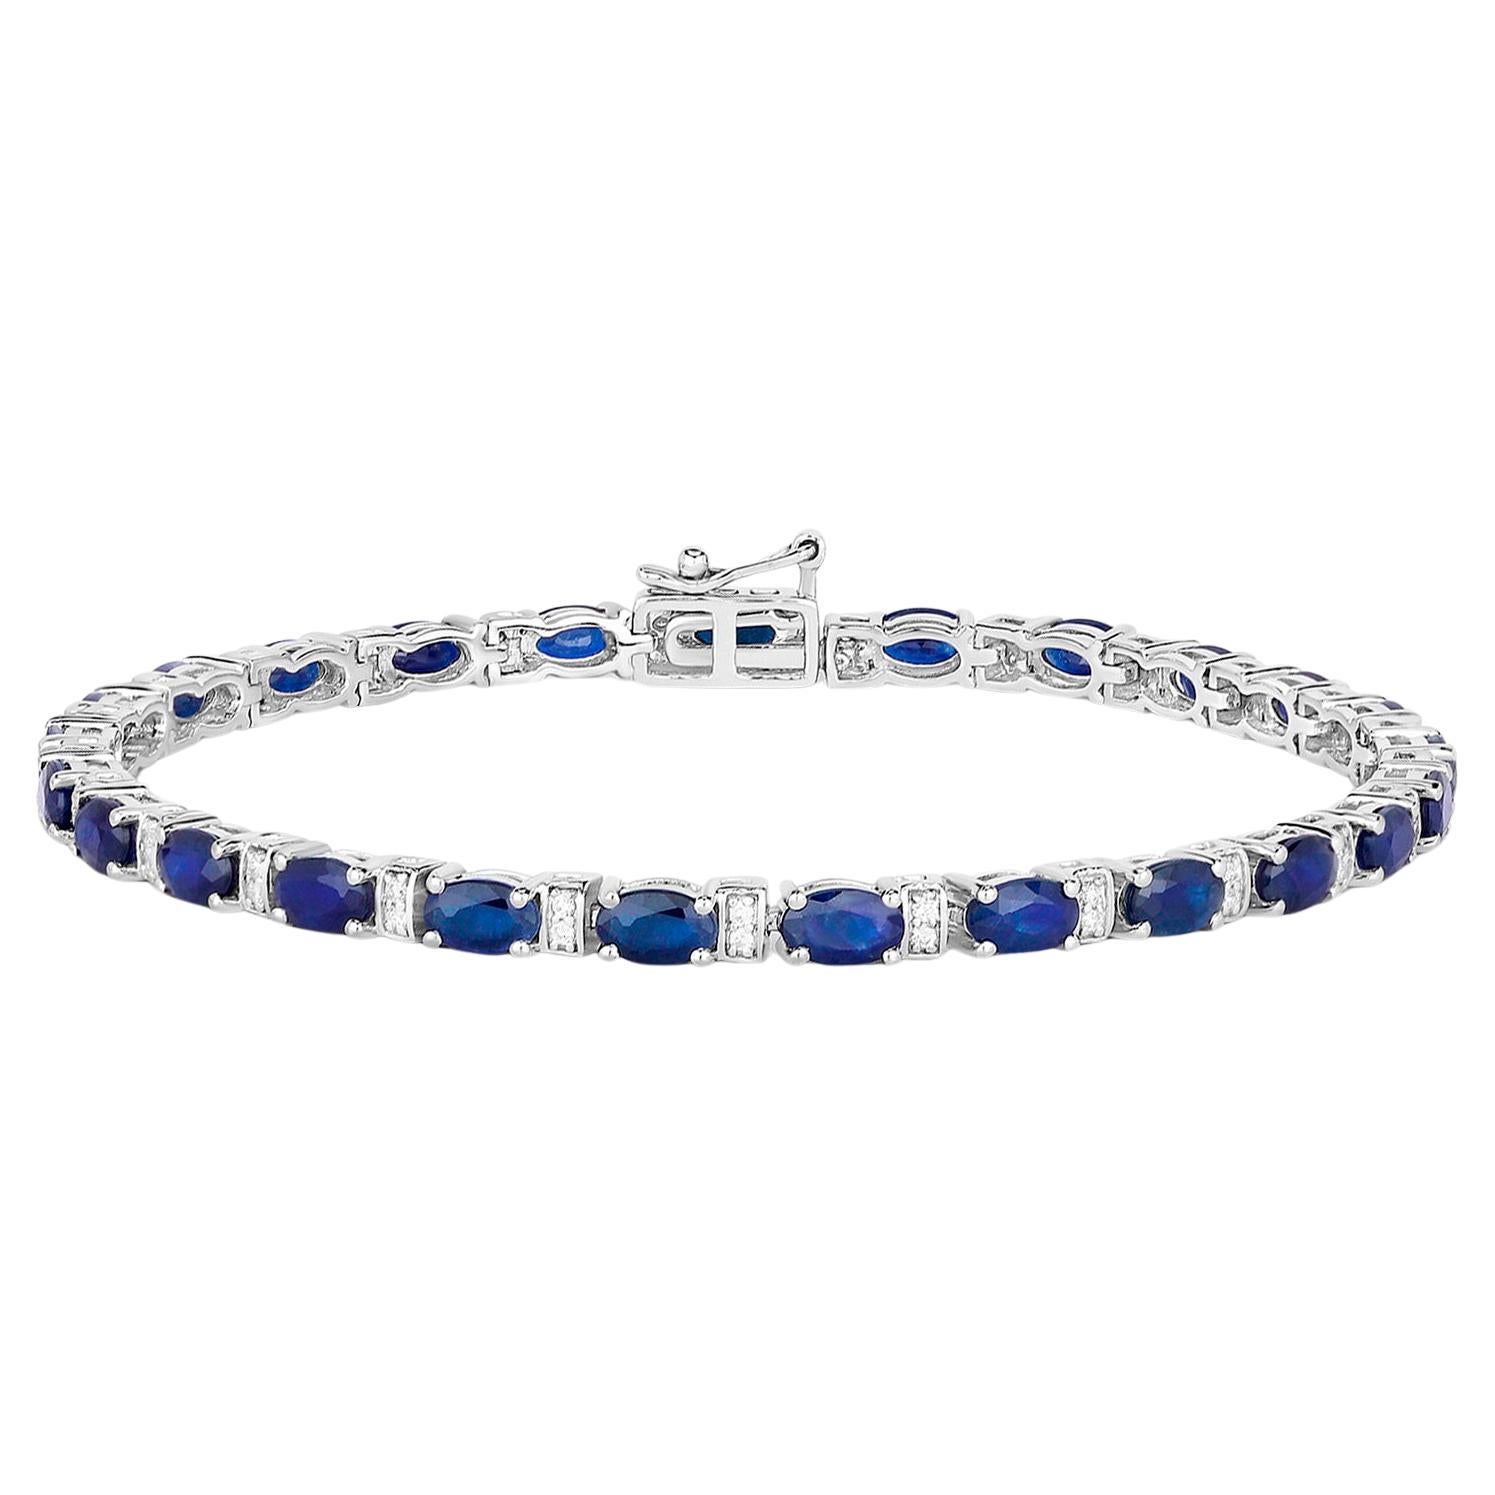 Blue Oval Cut Sapphires Bracelet Diamond Links 5.75 Carats 14K White Gold For Sale